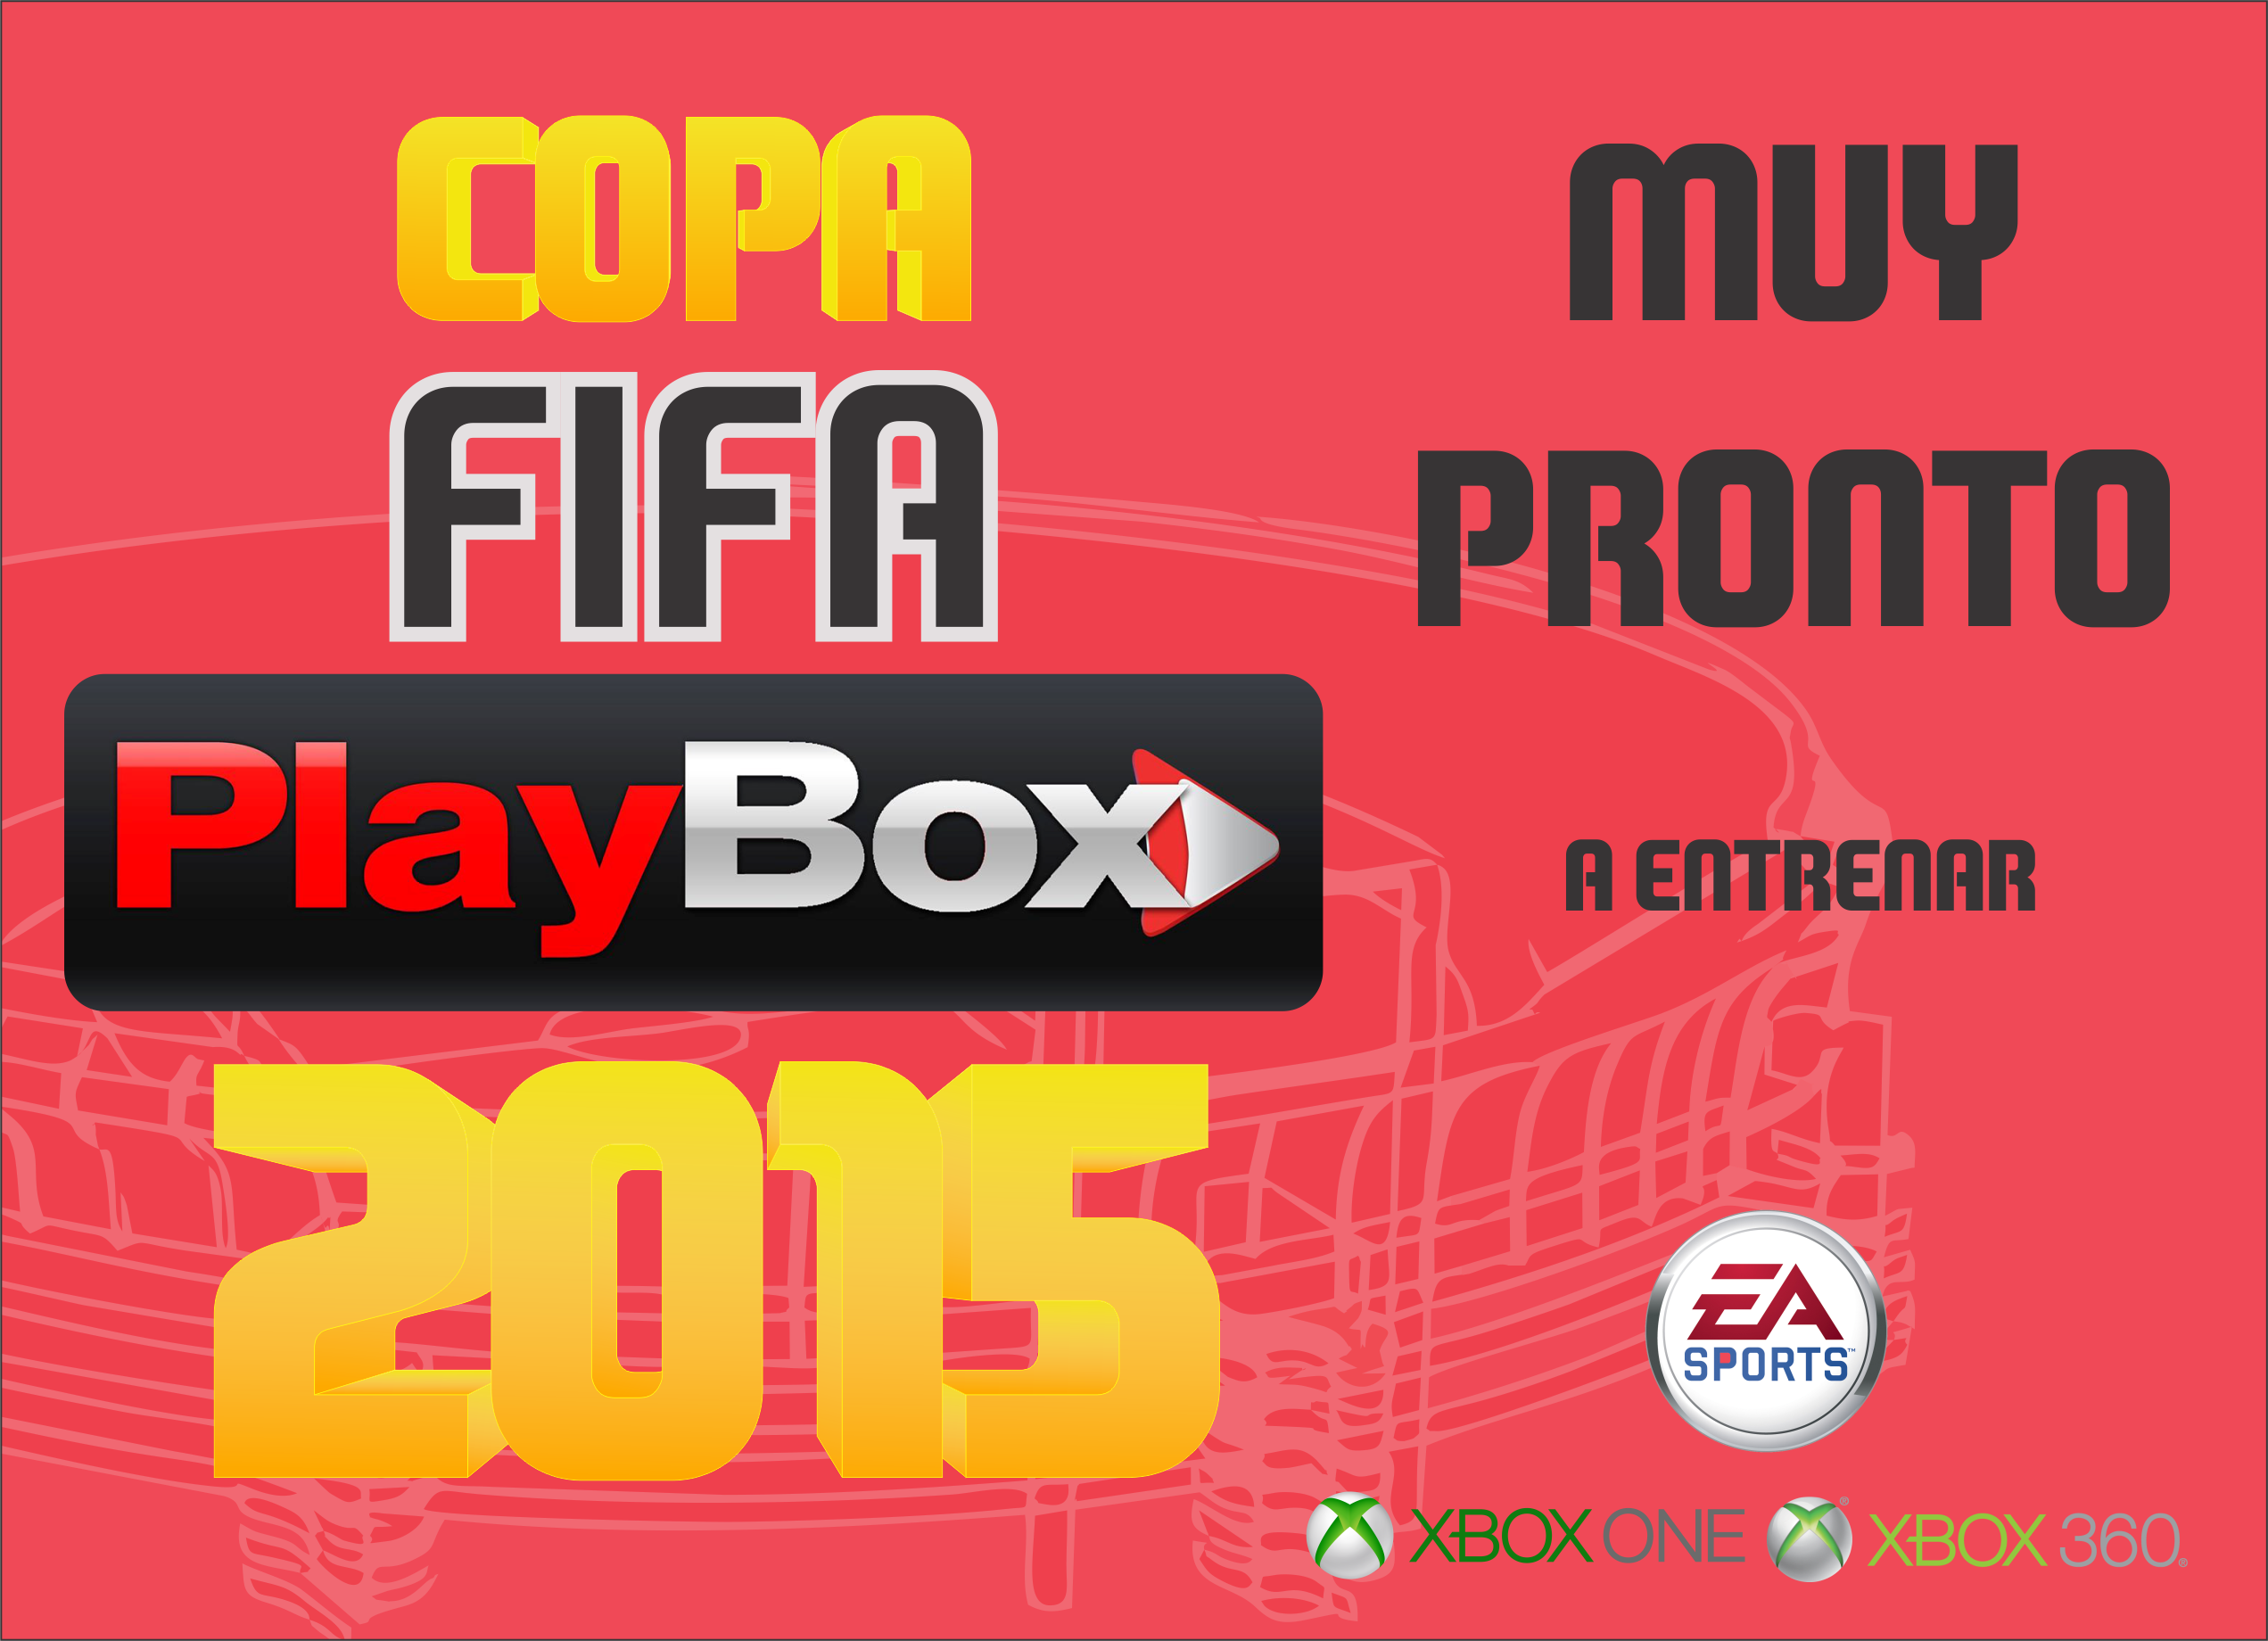 FIFA Copa Fifa Playbox 2015